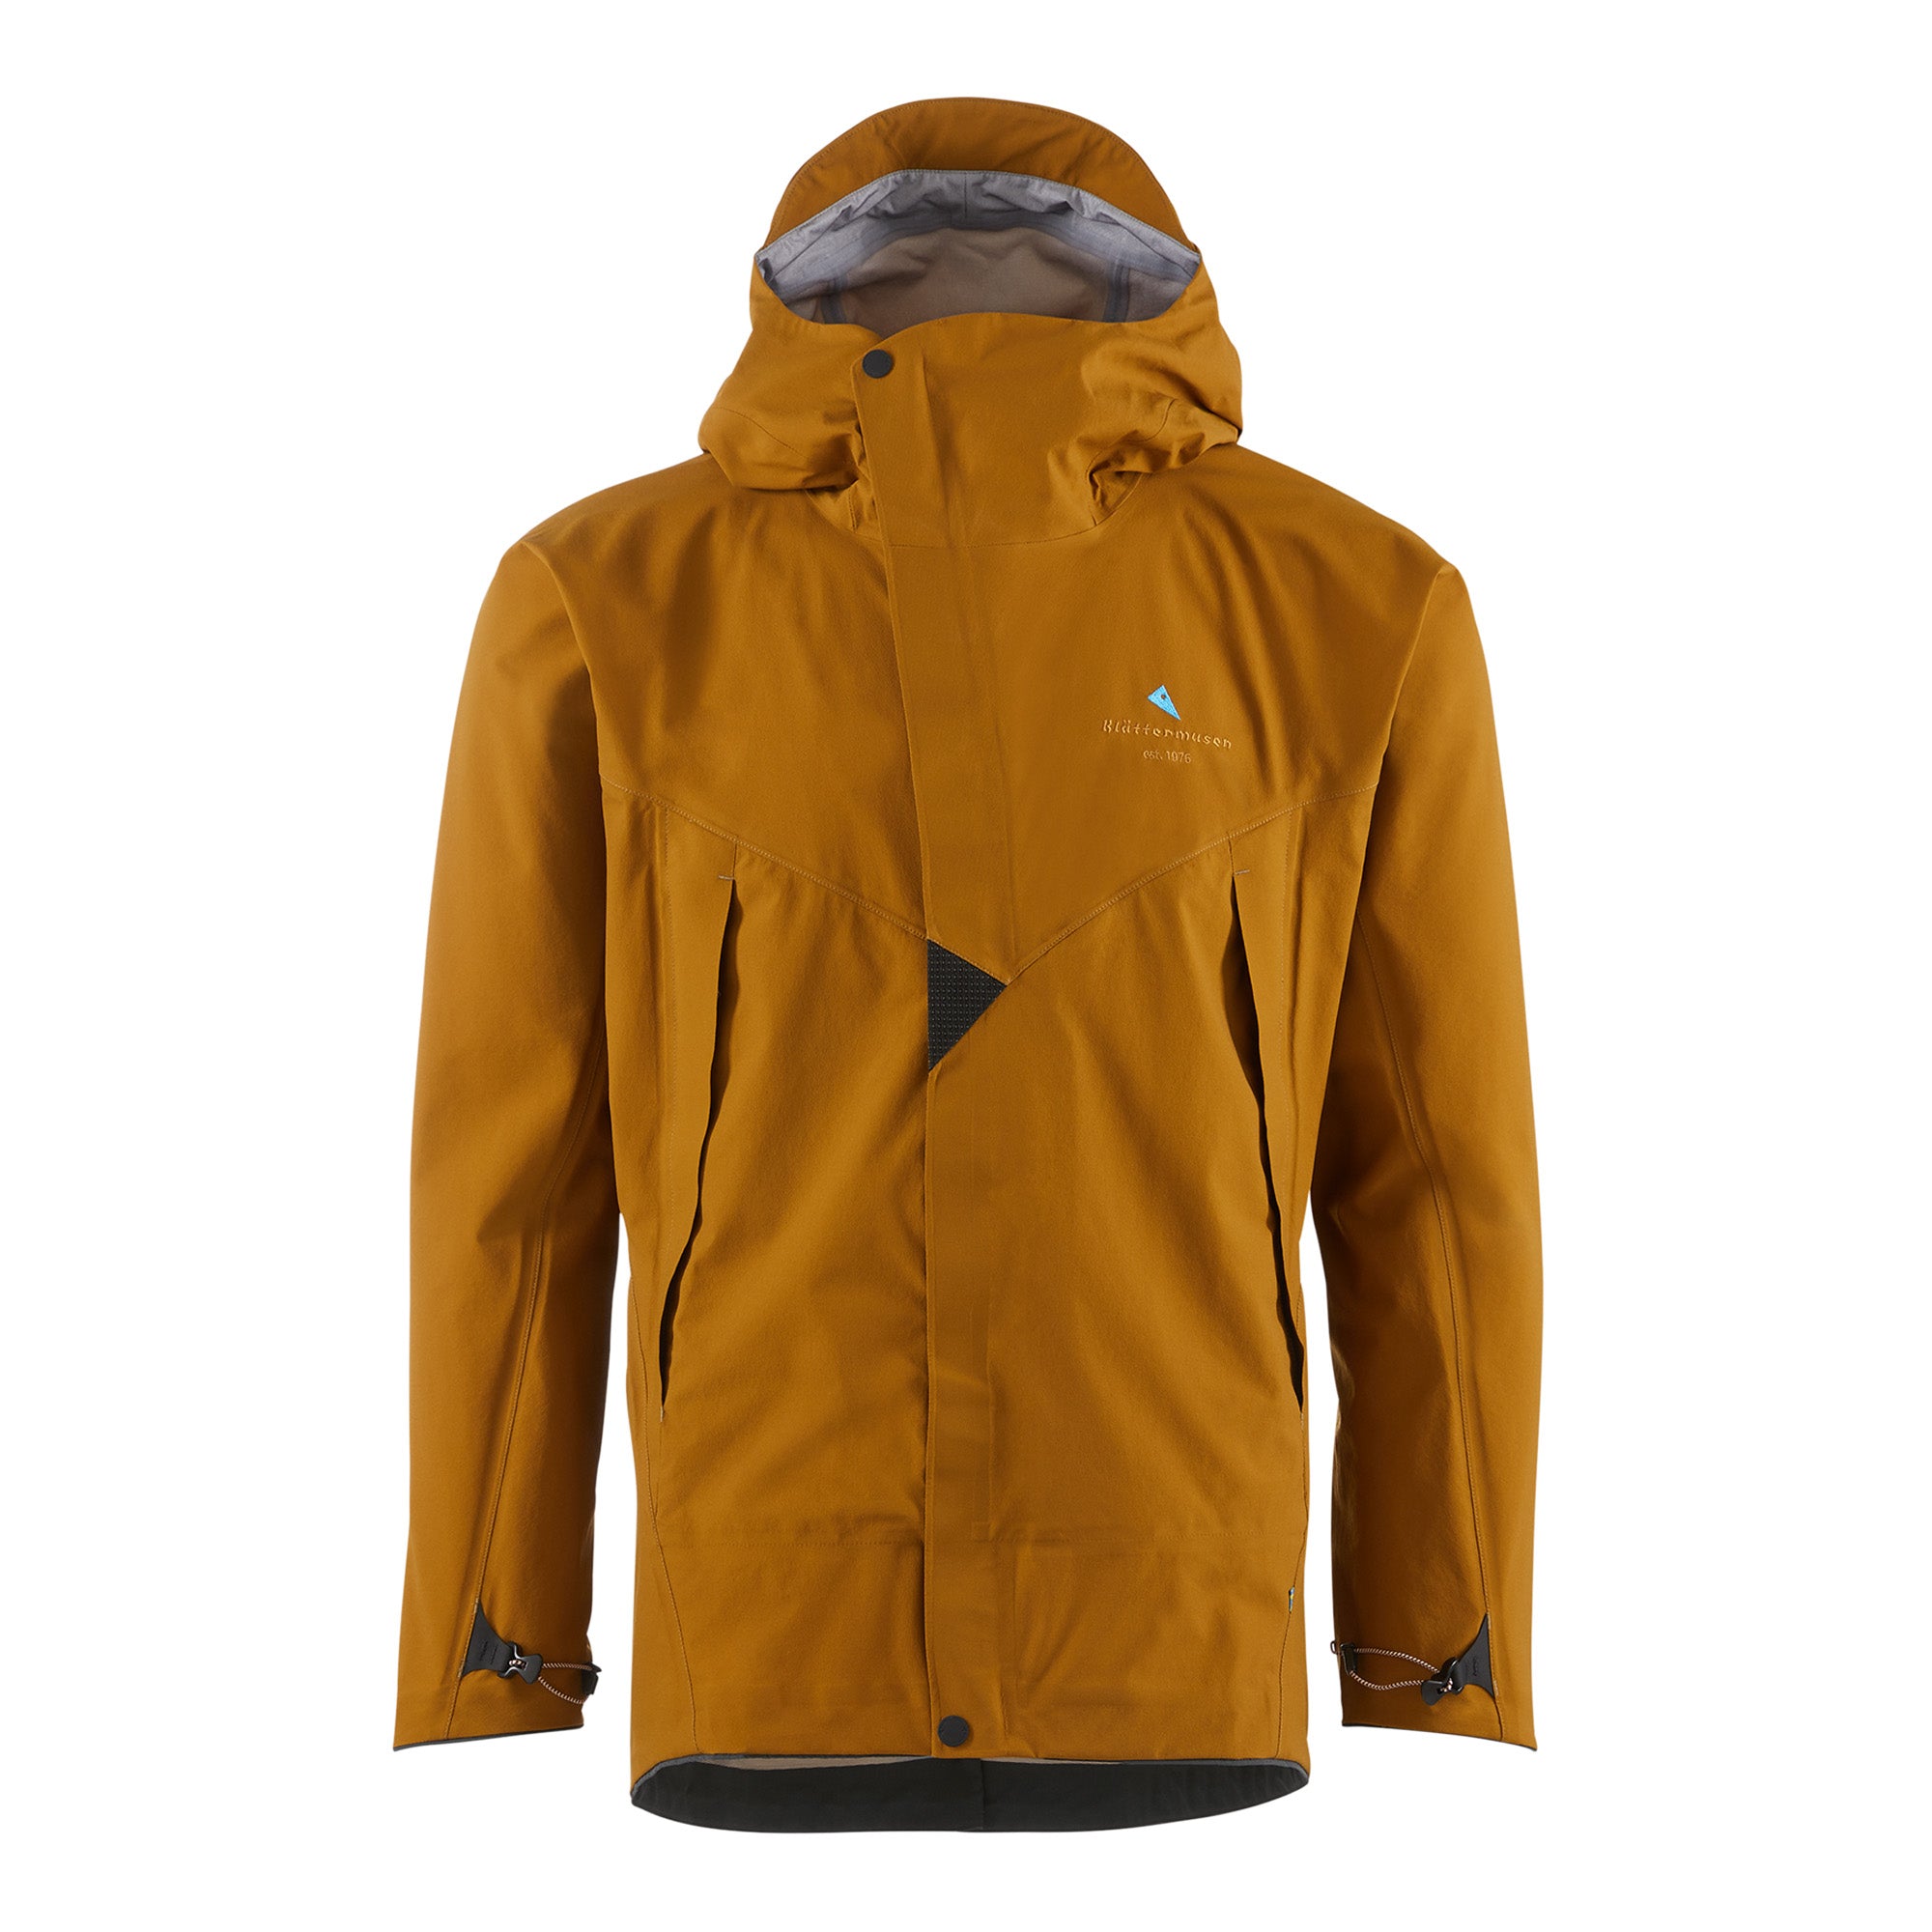 103 Levitend Cutan Rain Jacket 23 - Asynja Jacket Limited Edition